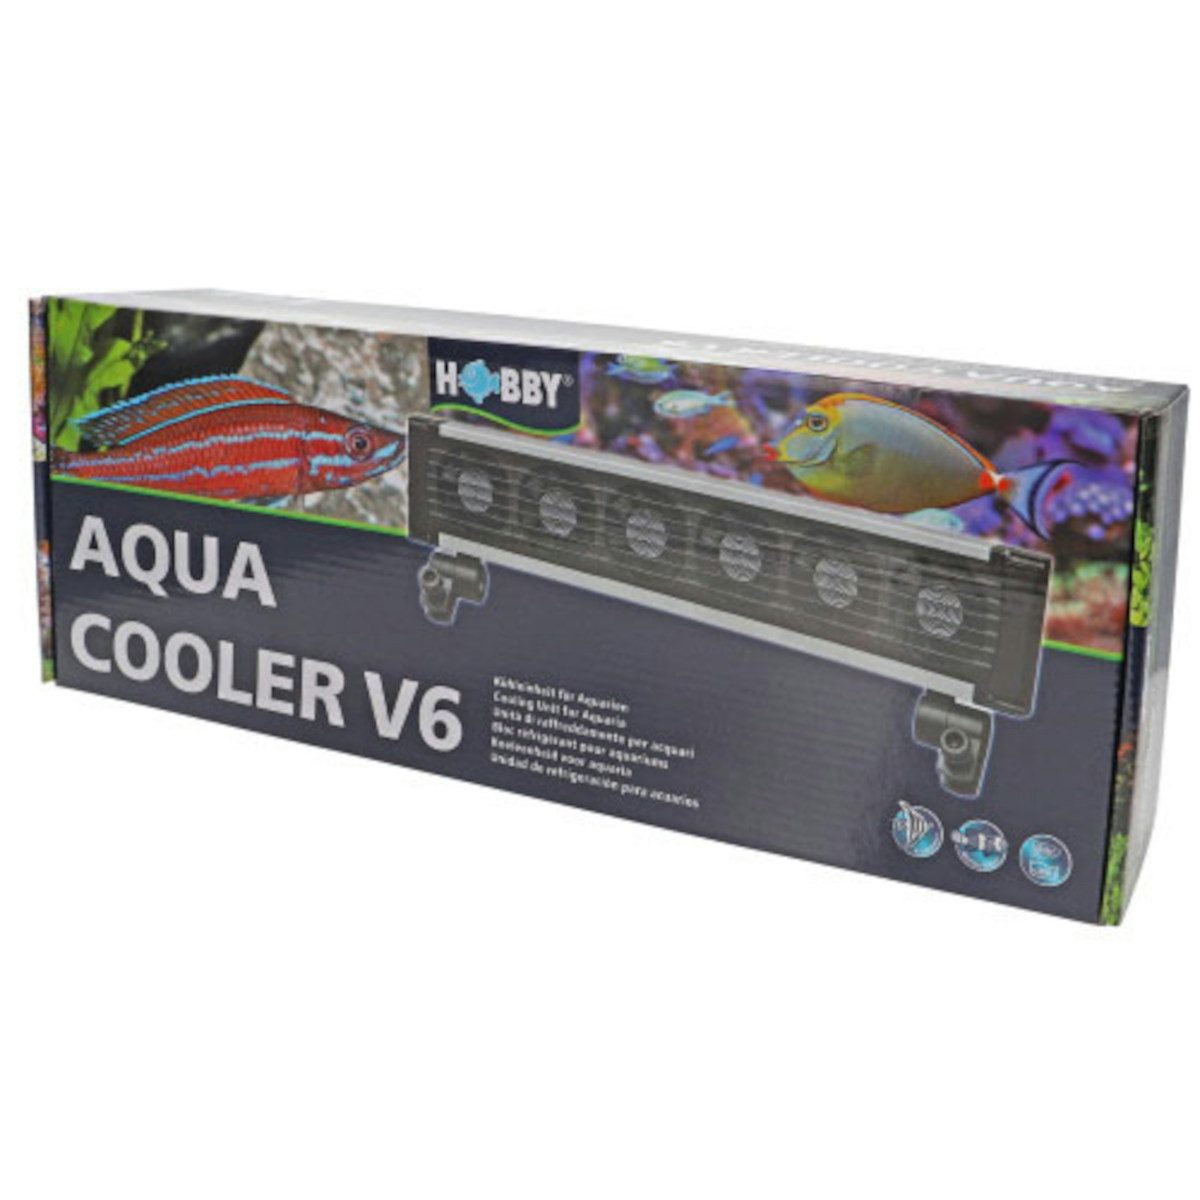 HOBBY Regelheizer Aqua Cooler V6 Kühleinheit für Aquarien ab 300 L